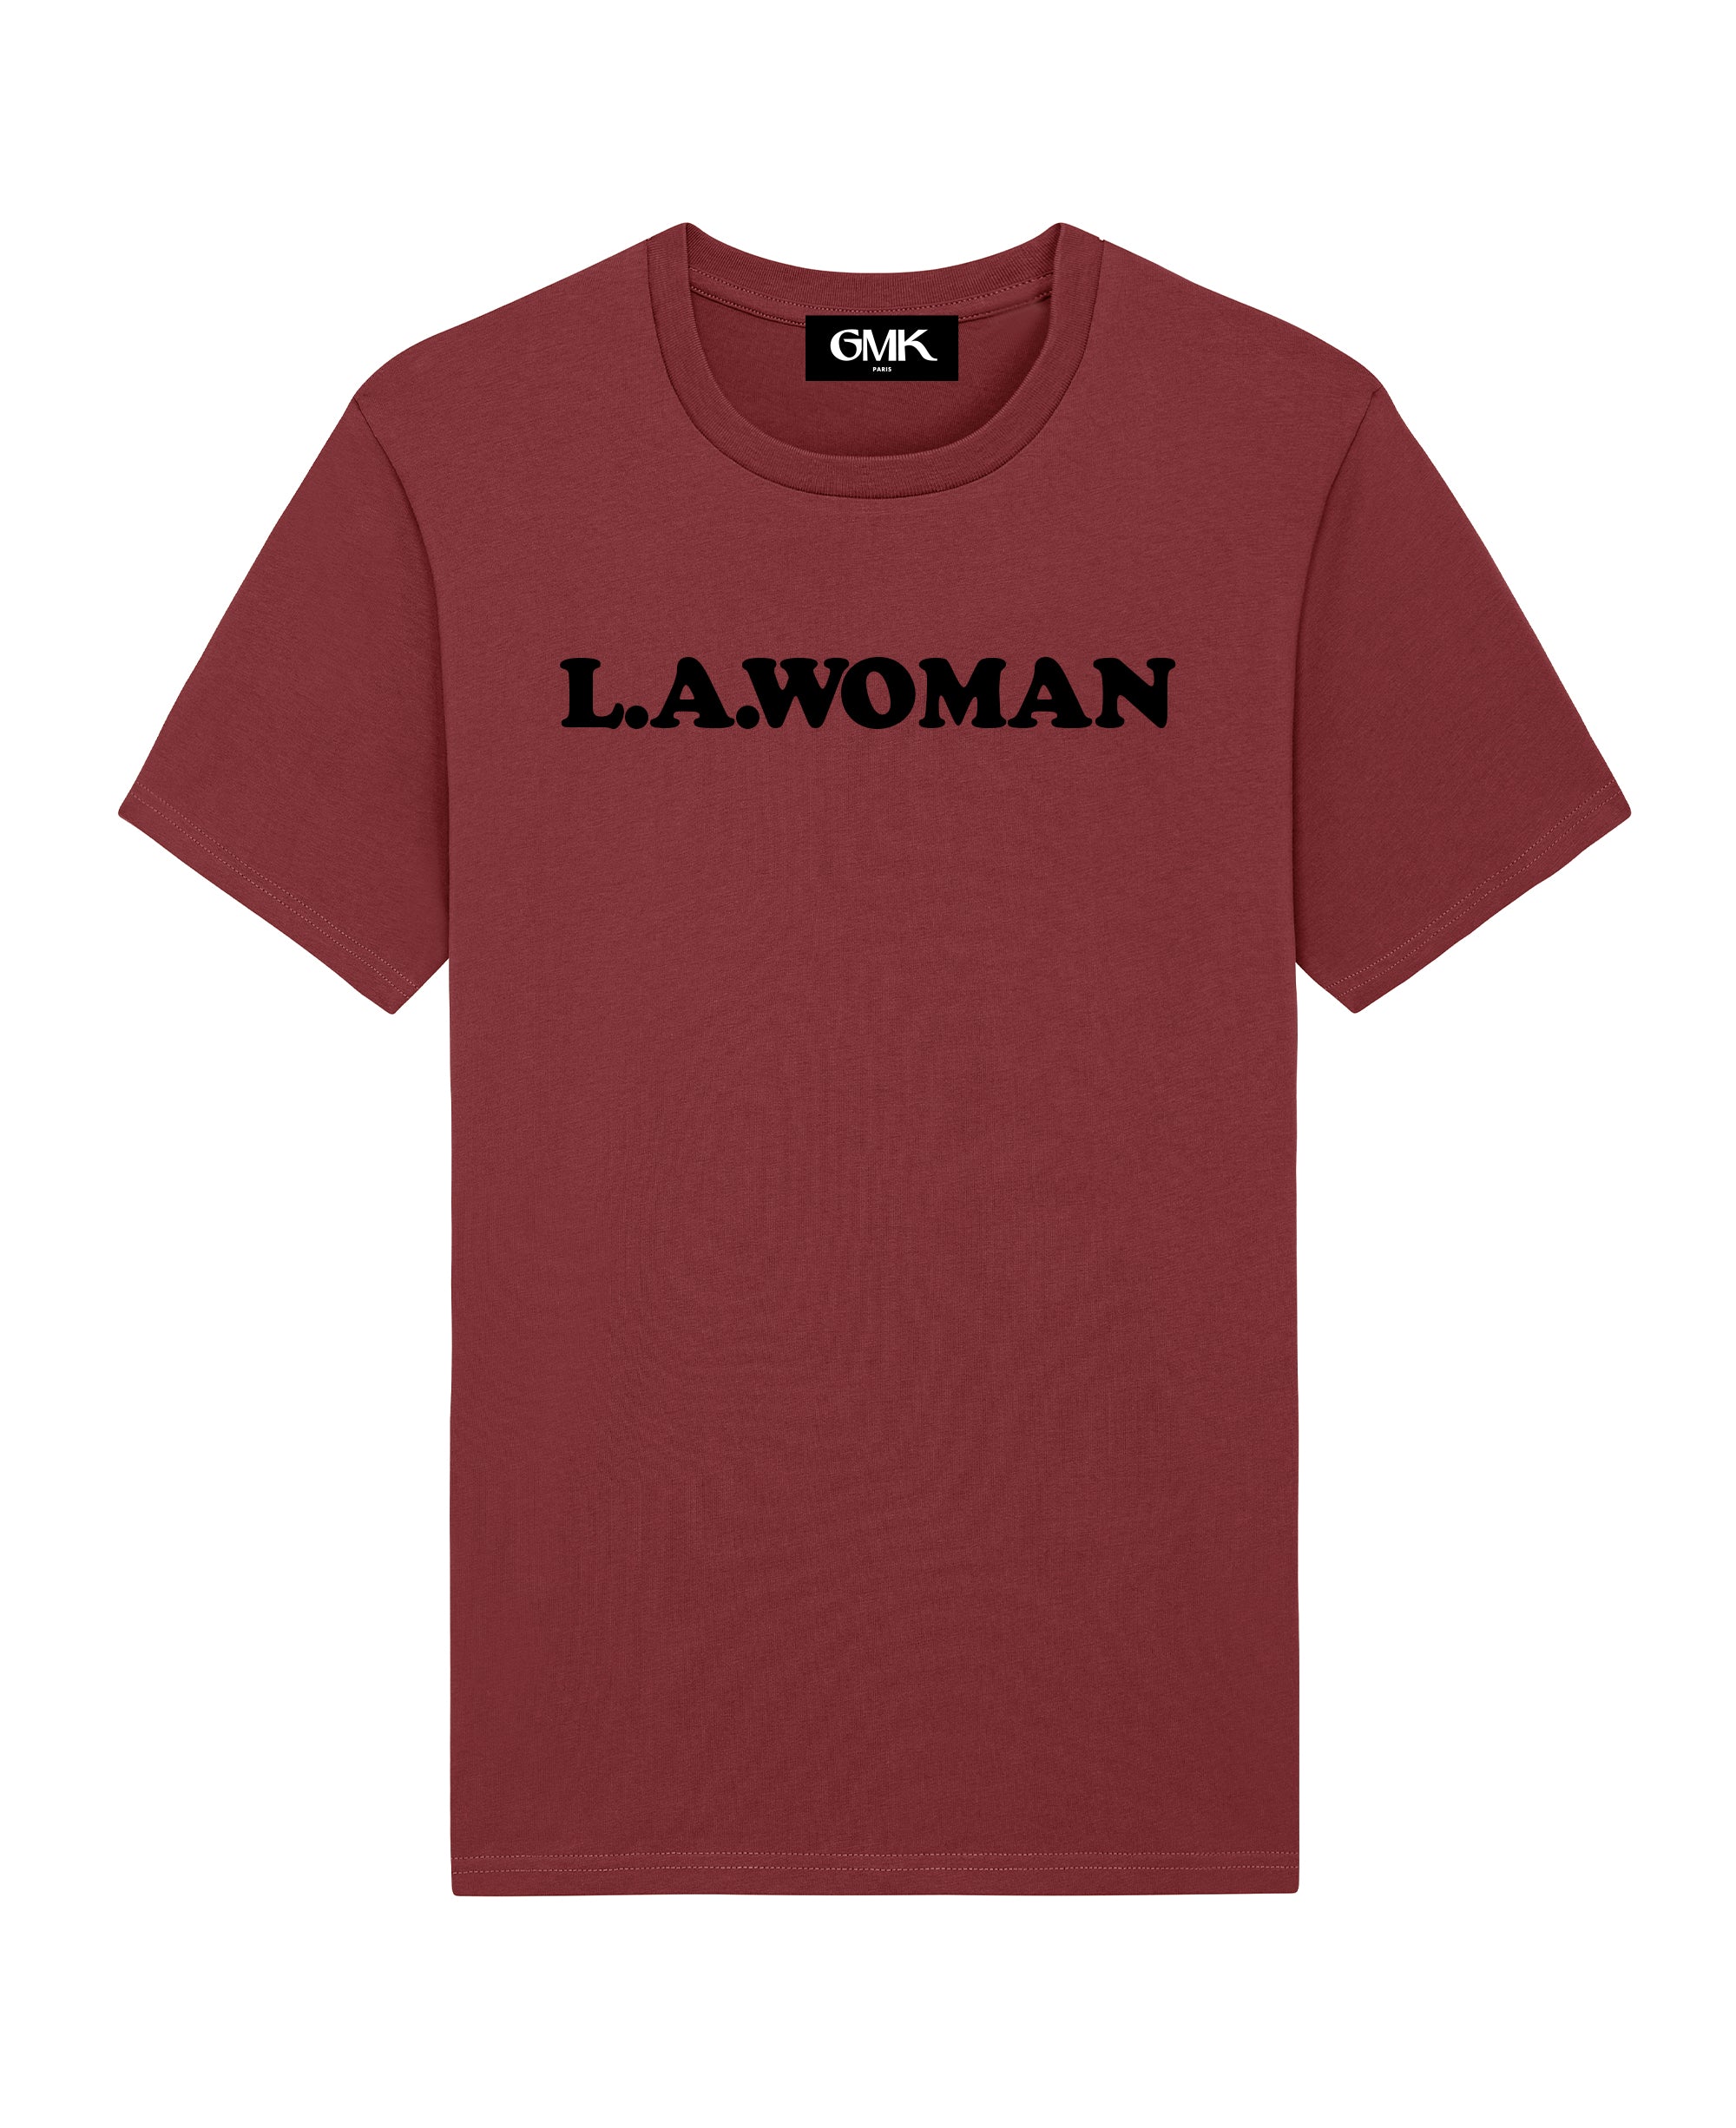 L.A.WOMAN T-shirt - Good Morning Keith